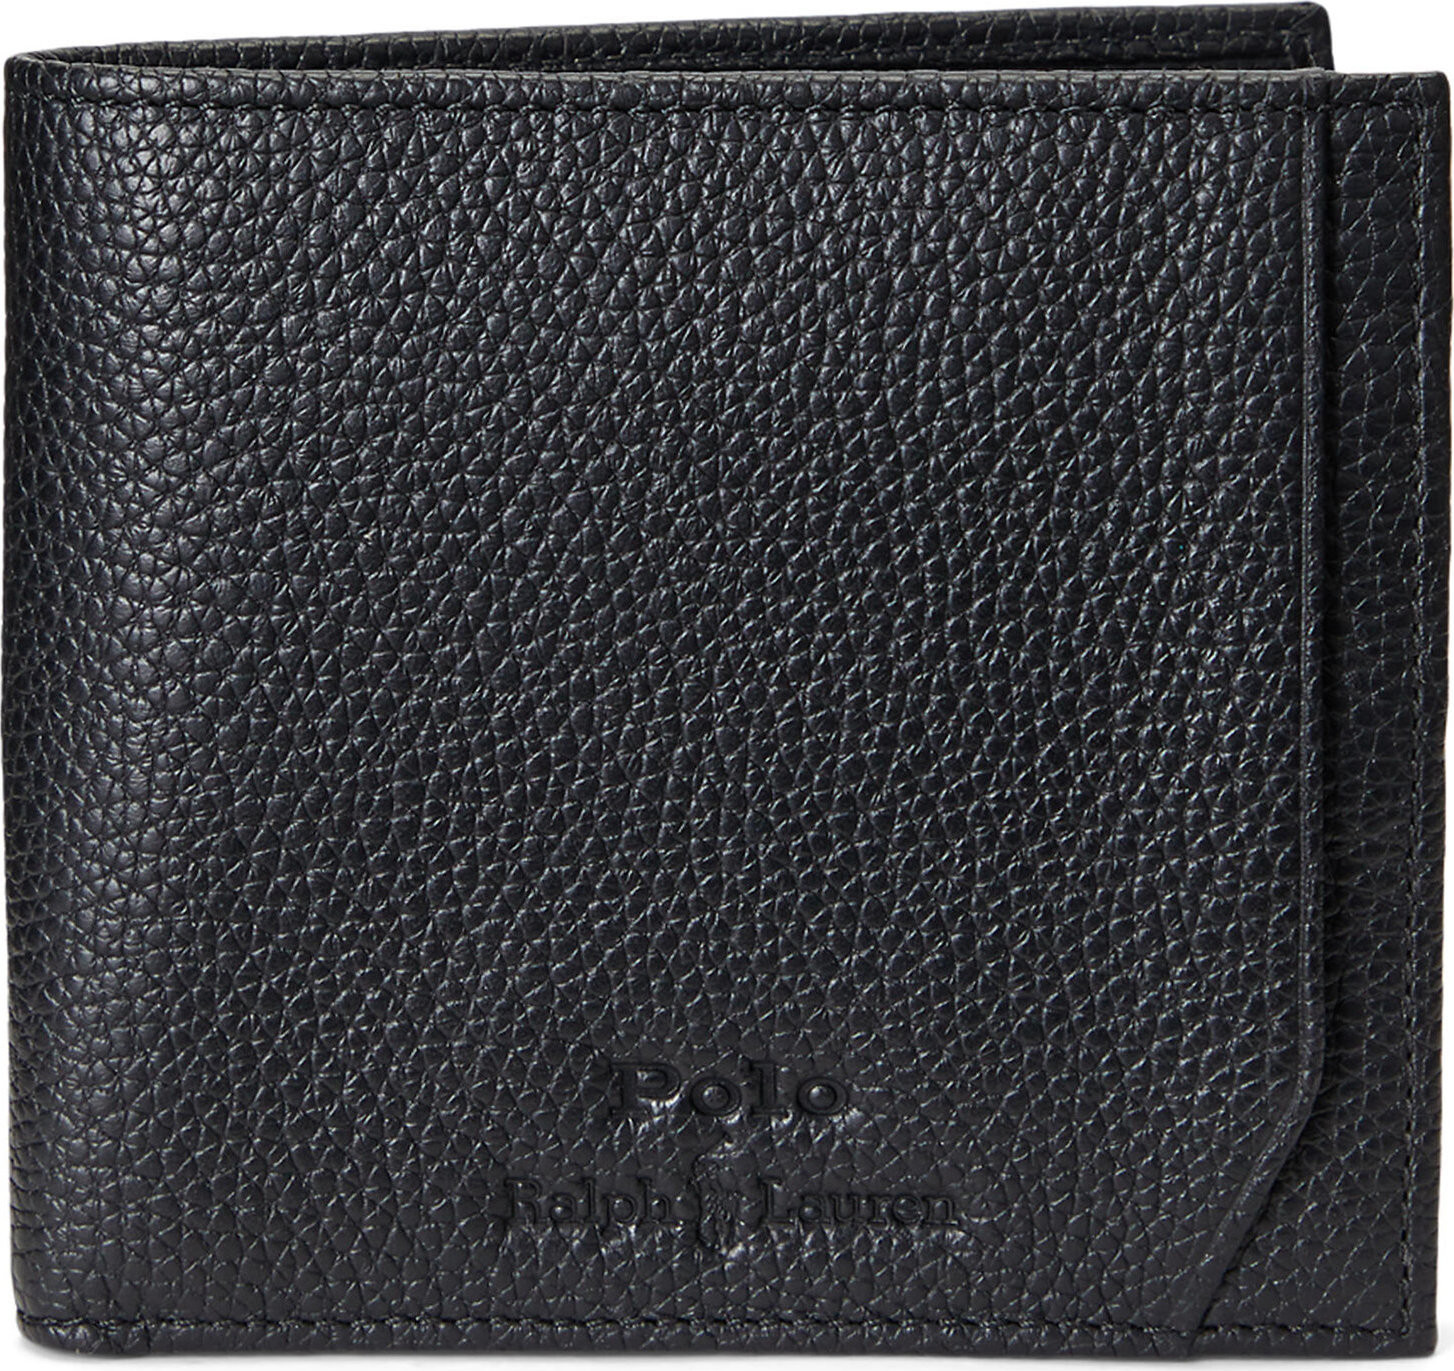 Pánská peněženka Polo Ralph Lauren 405914158001 Black